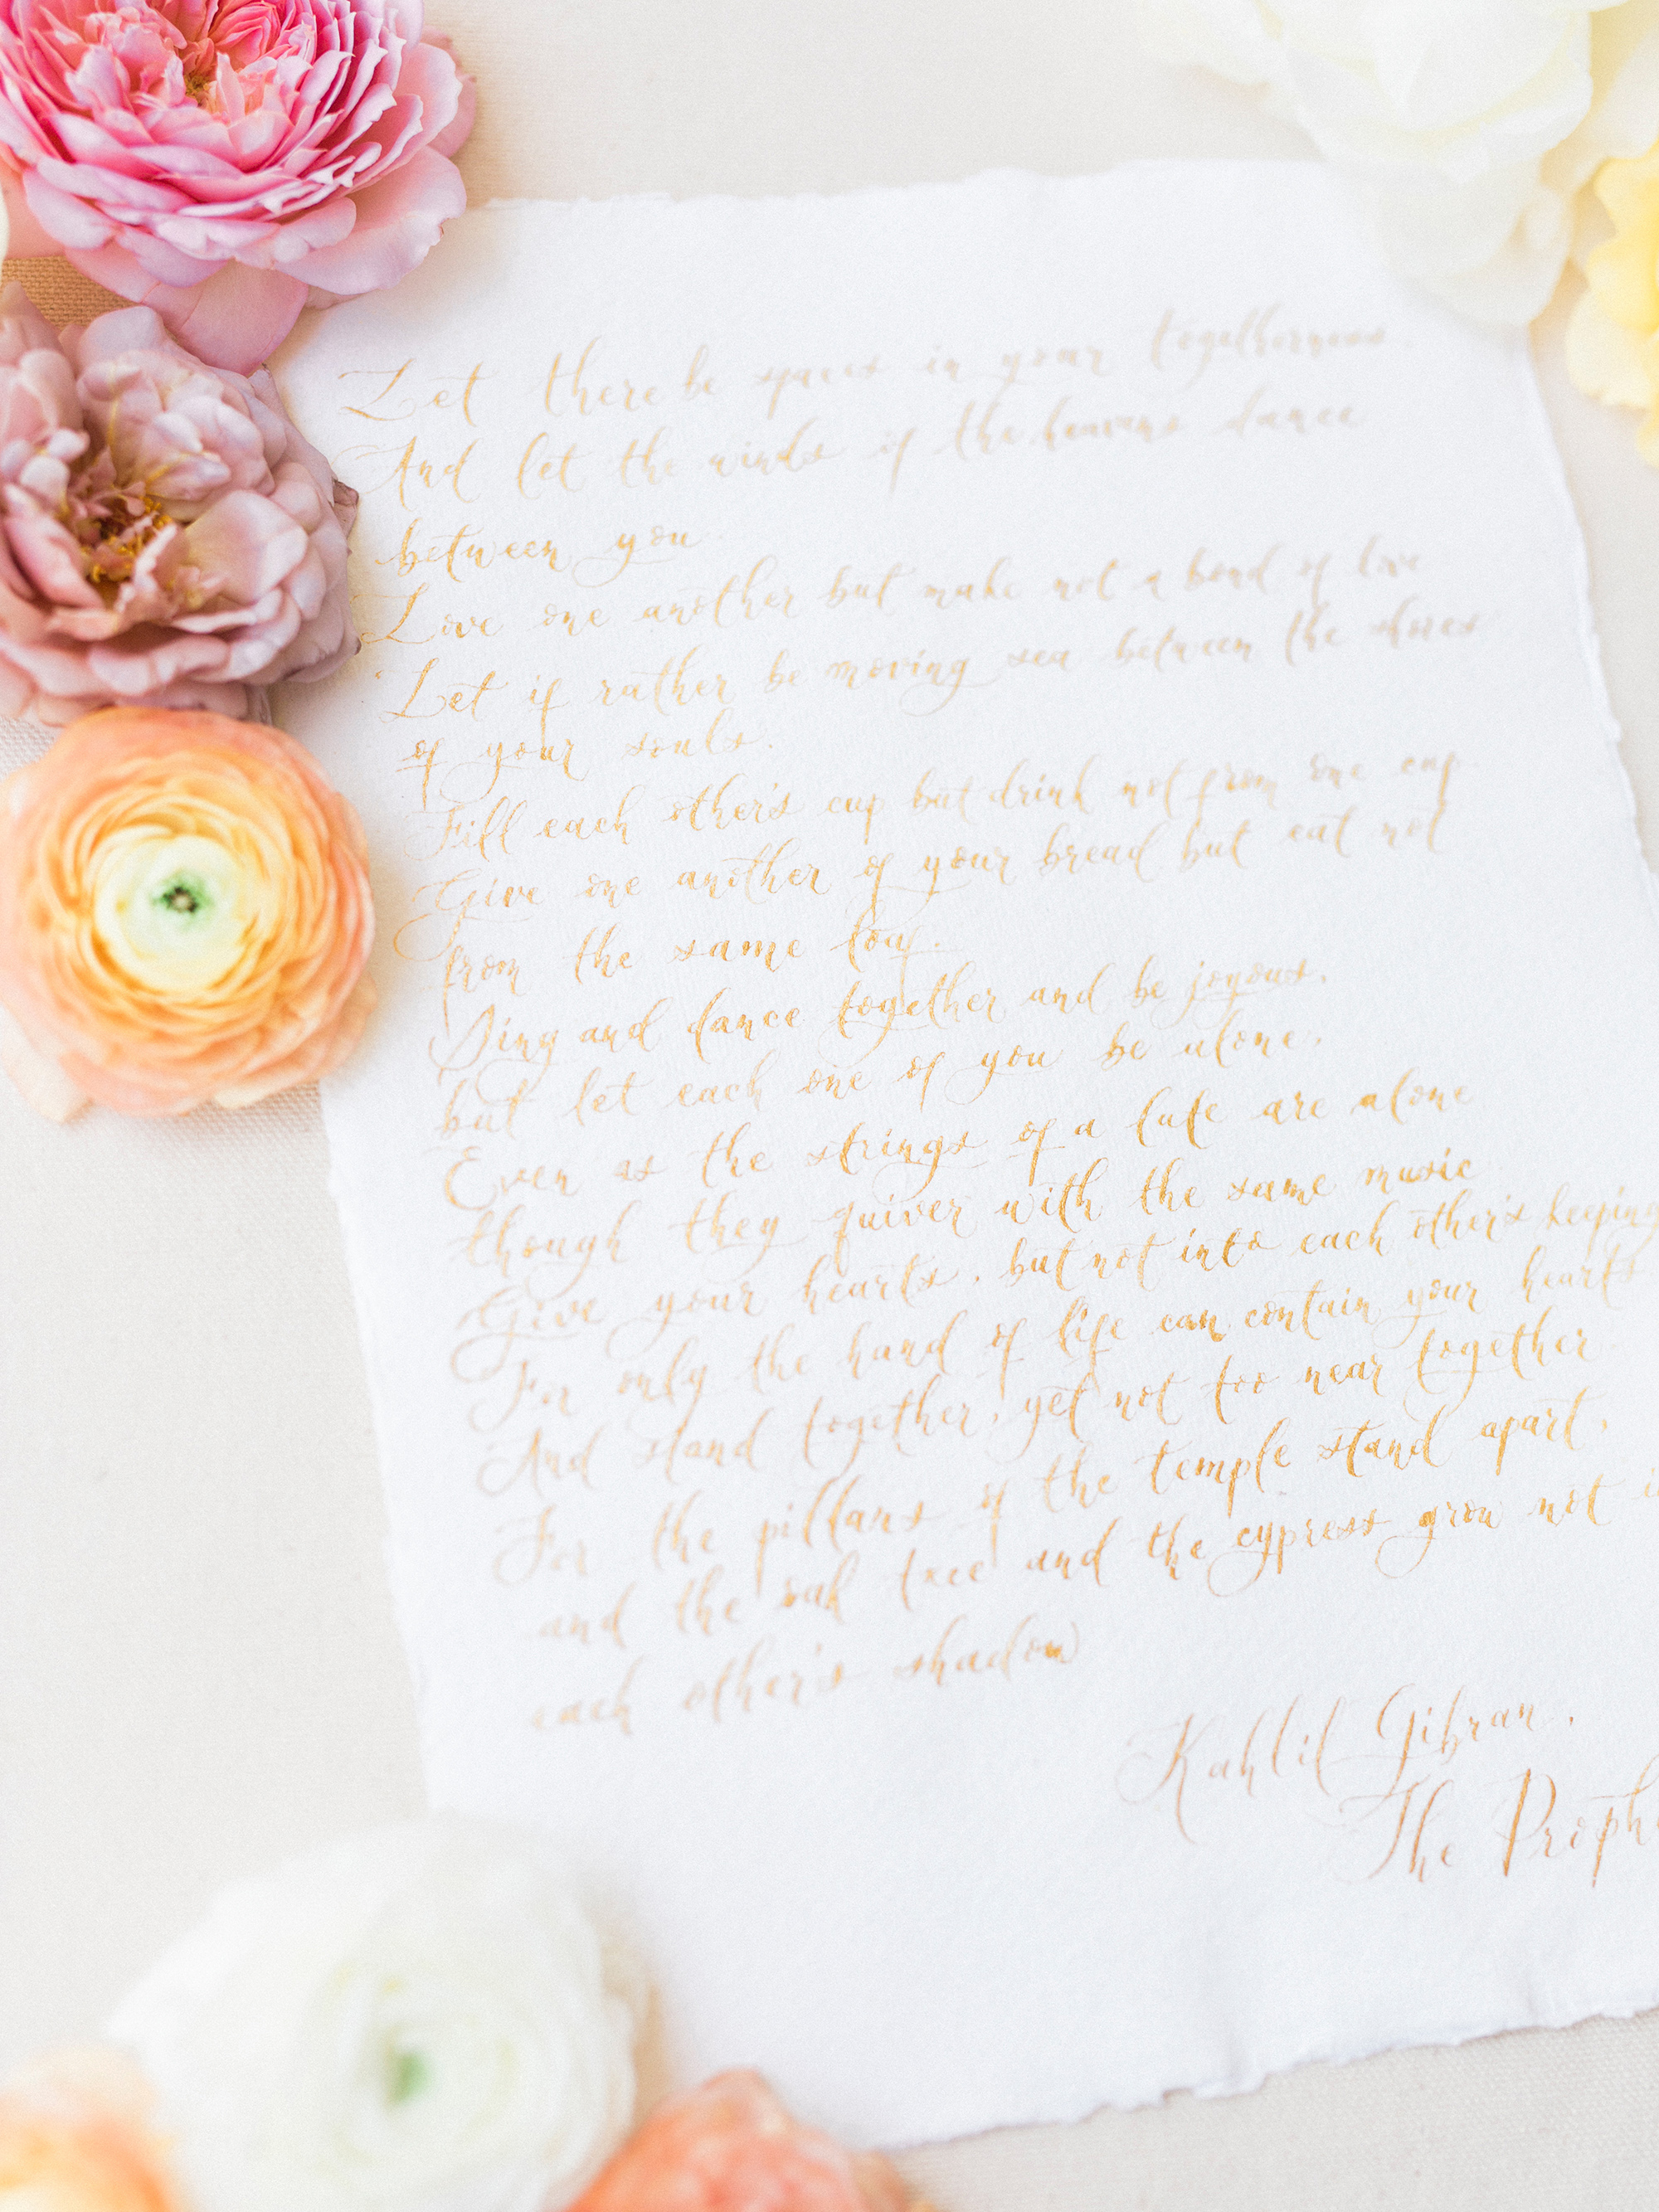 Wedding vows photographed by Santa Barbara wedding photographer Tenth & Grace.